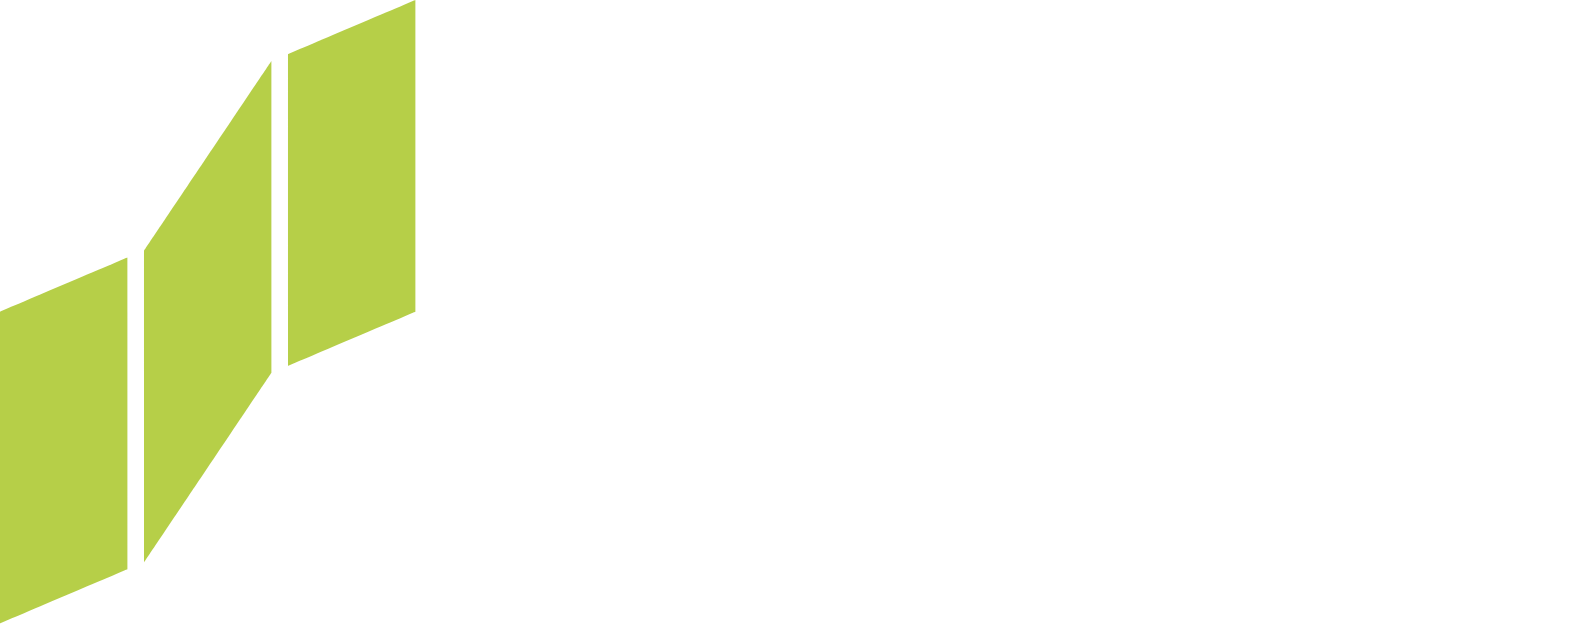 Sumitomo Mitsui Financial Group logo grand pour les fonds sombres (PNG transparent)